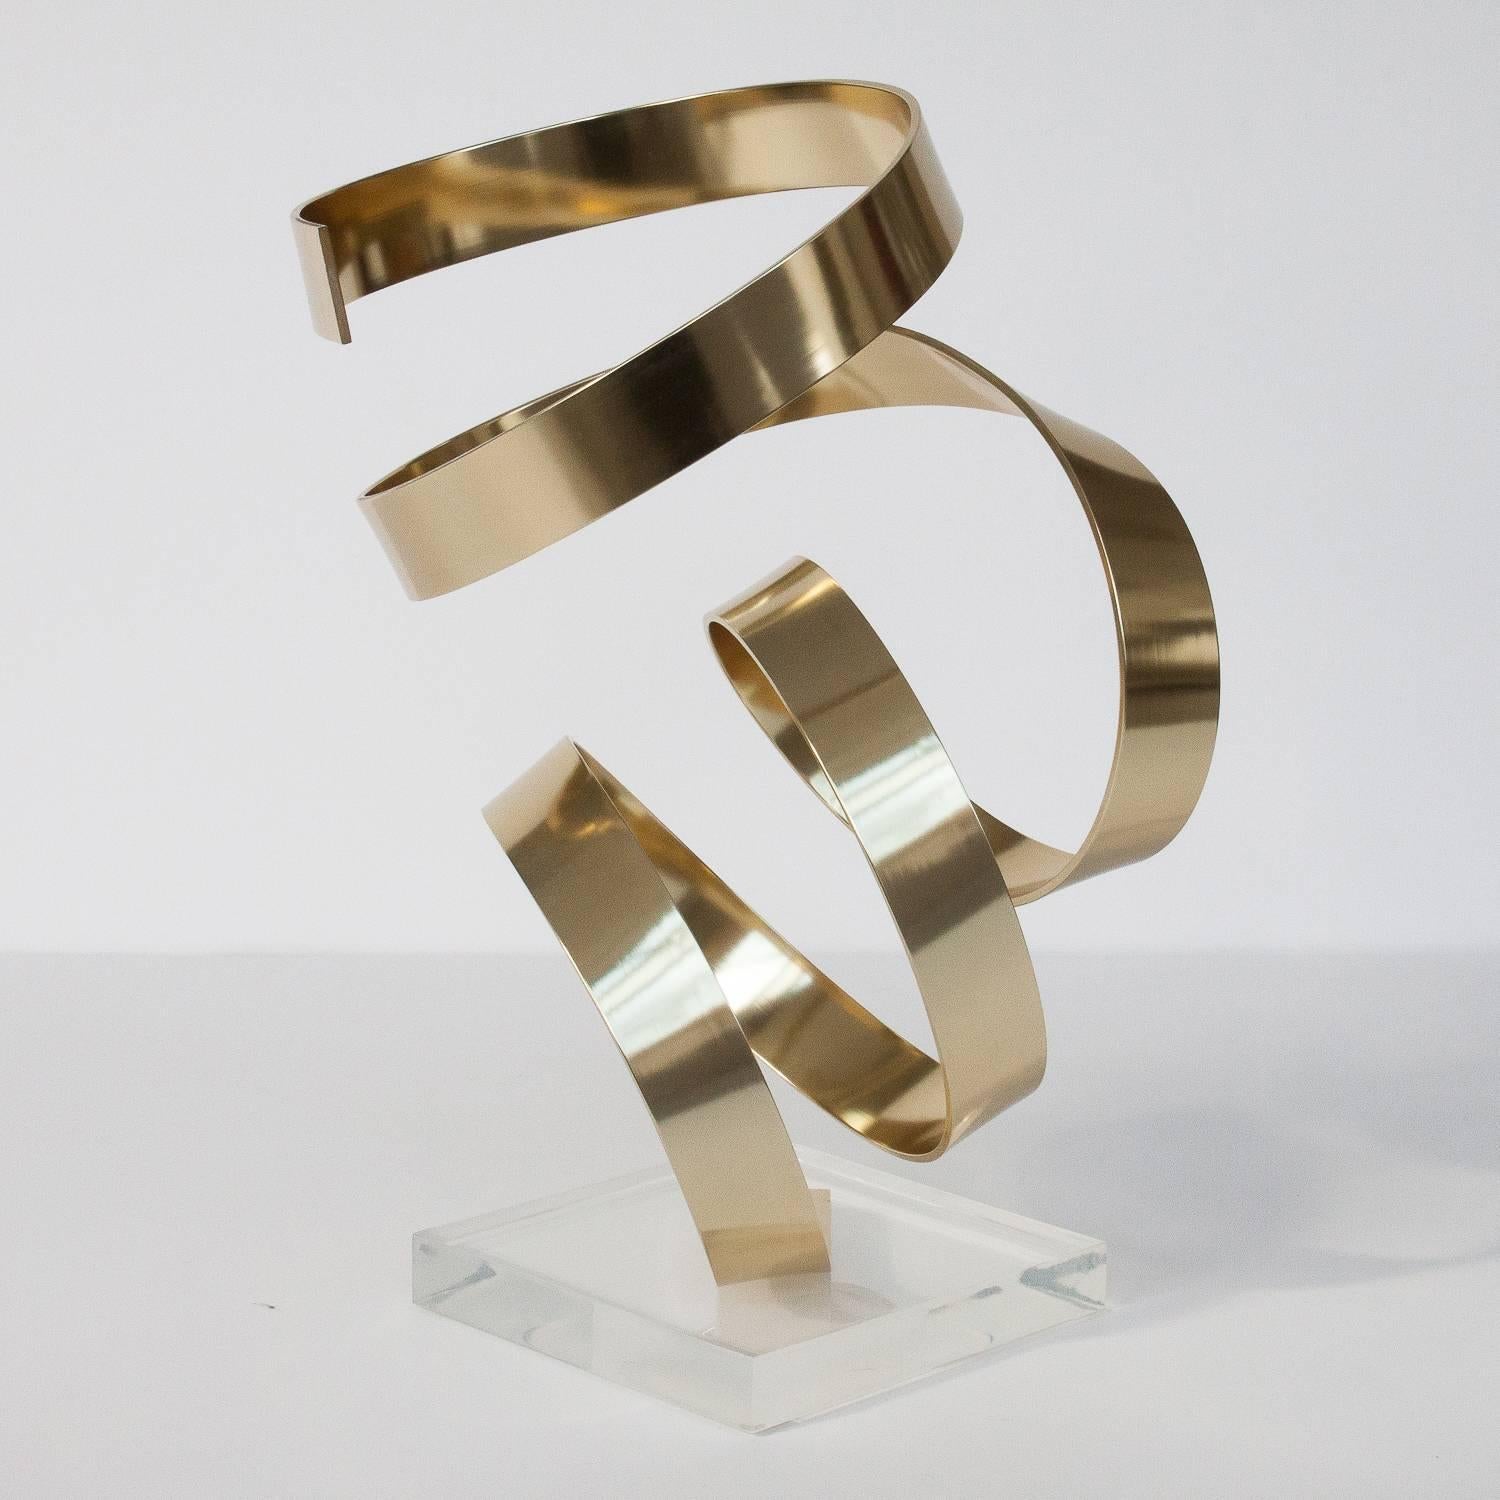 Anodized Dan Murphy Abstract Ribbon Sculpture